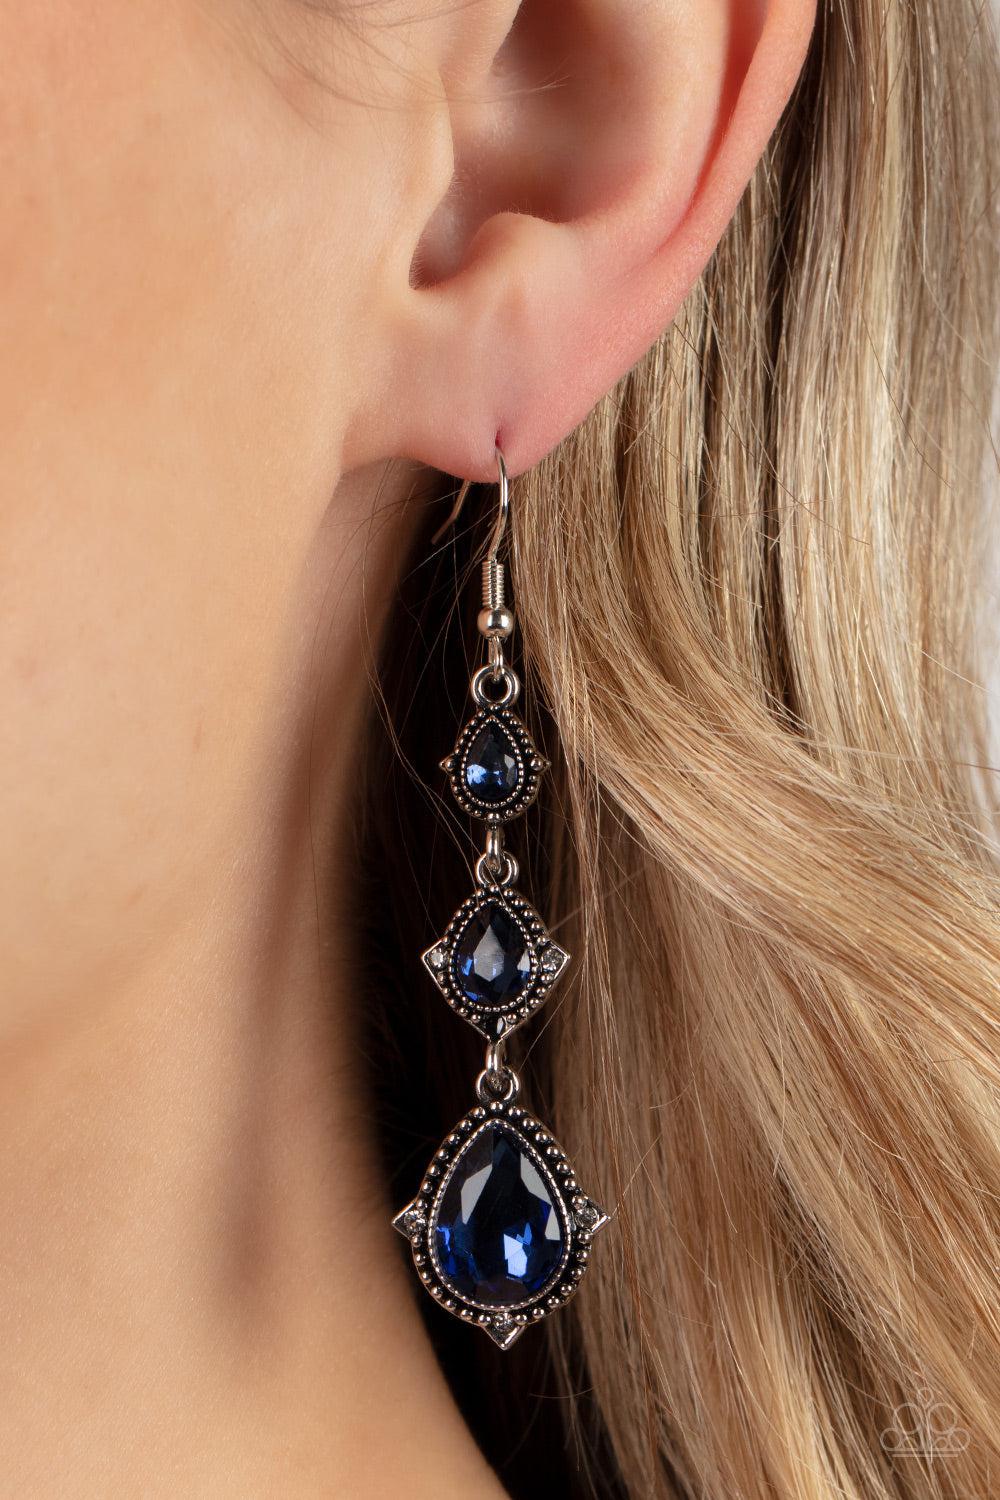 Prague Princess Blue Rhinestone Earrings - Paparazzi Accessories-on model - CarasShop.com - $5 Jewelry by Cara Jewels